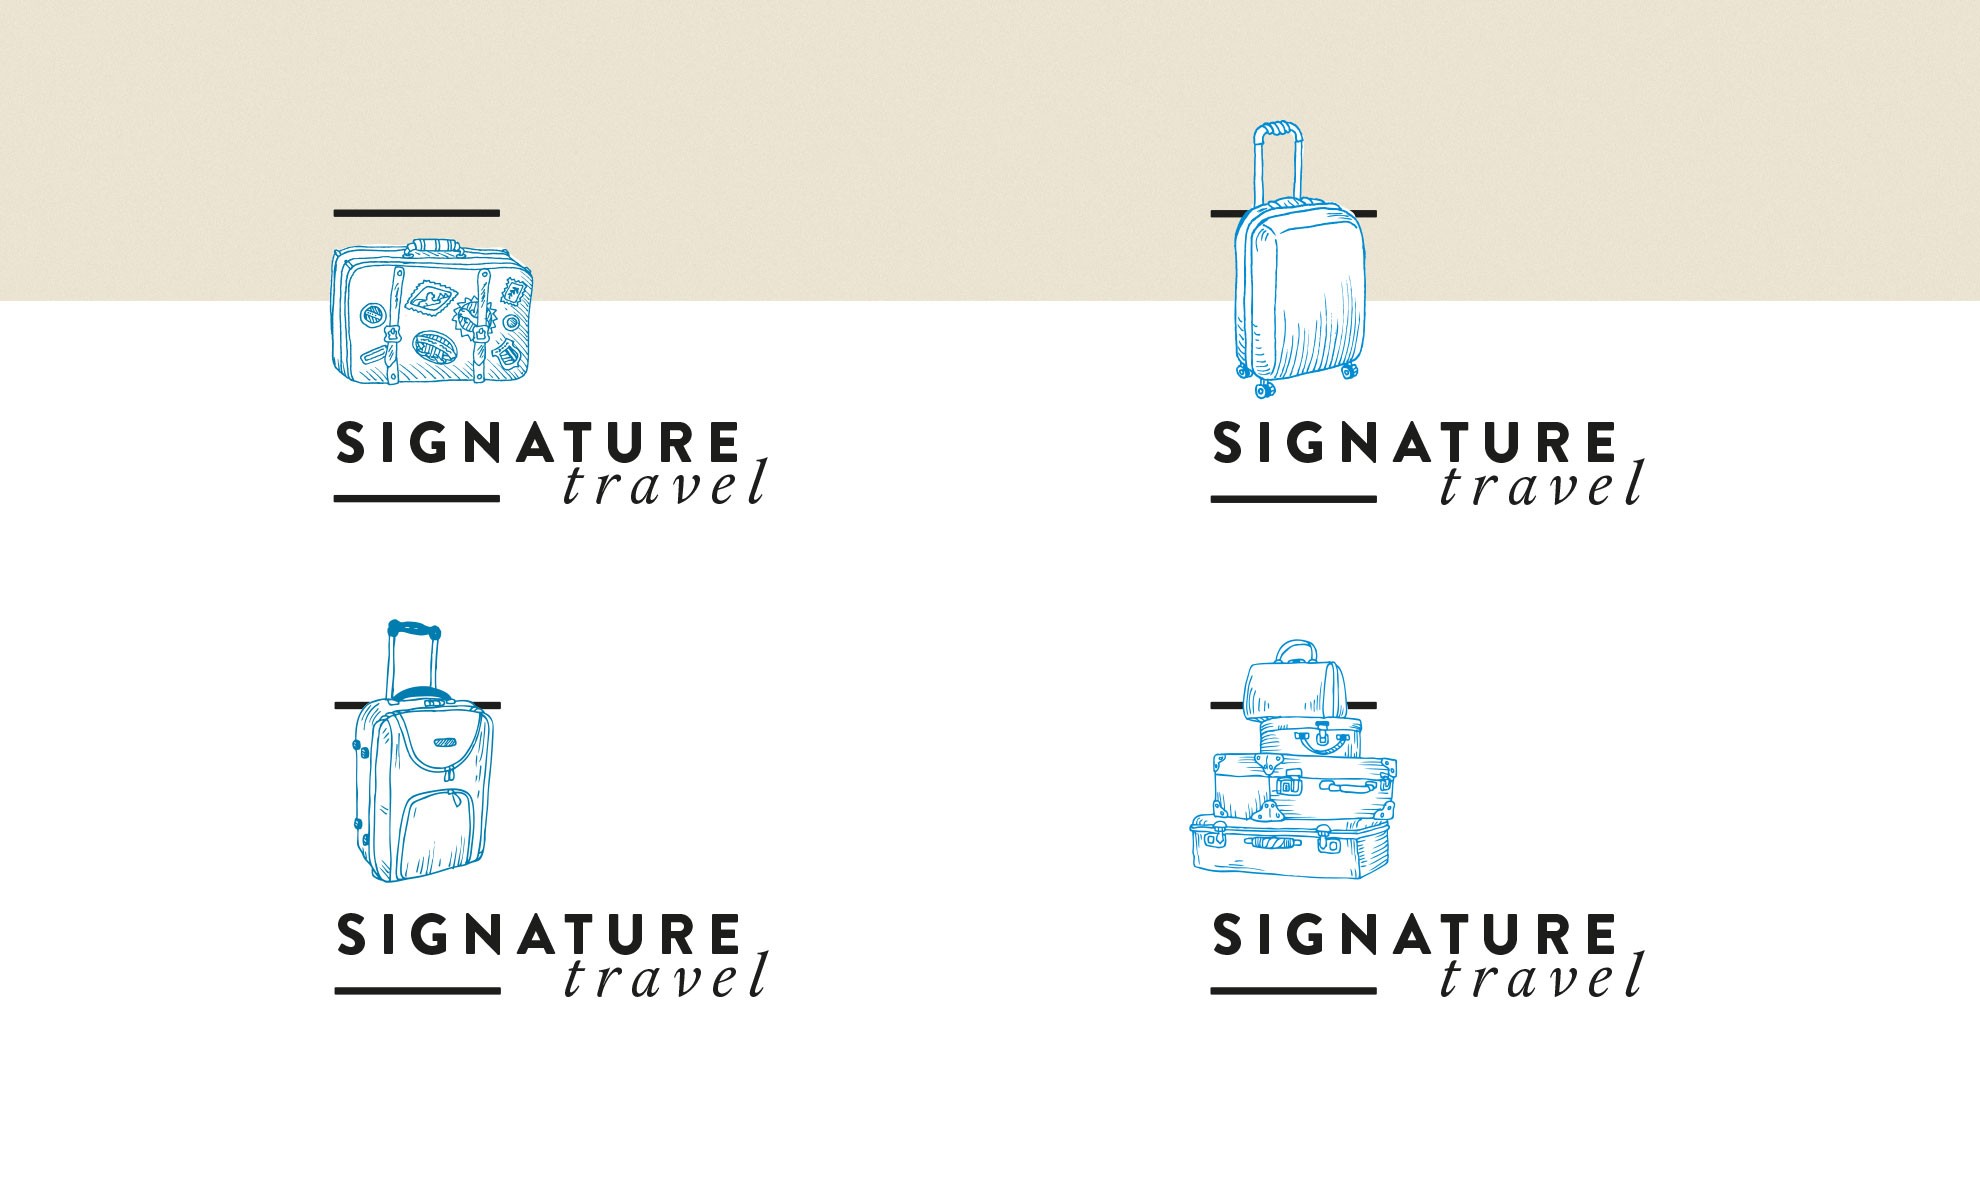 Design de Identidade Visual Signature Travel por Lampejos